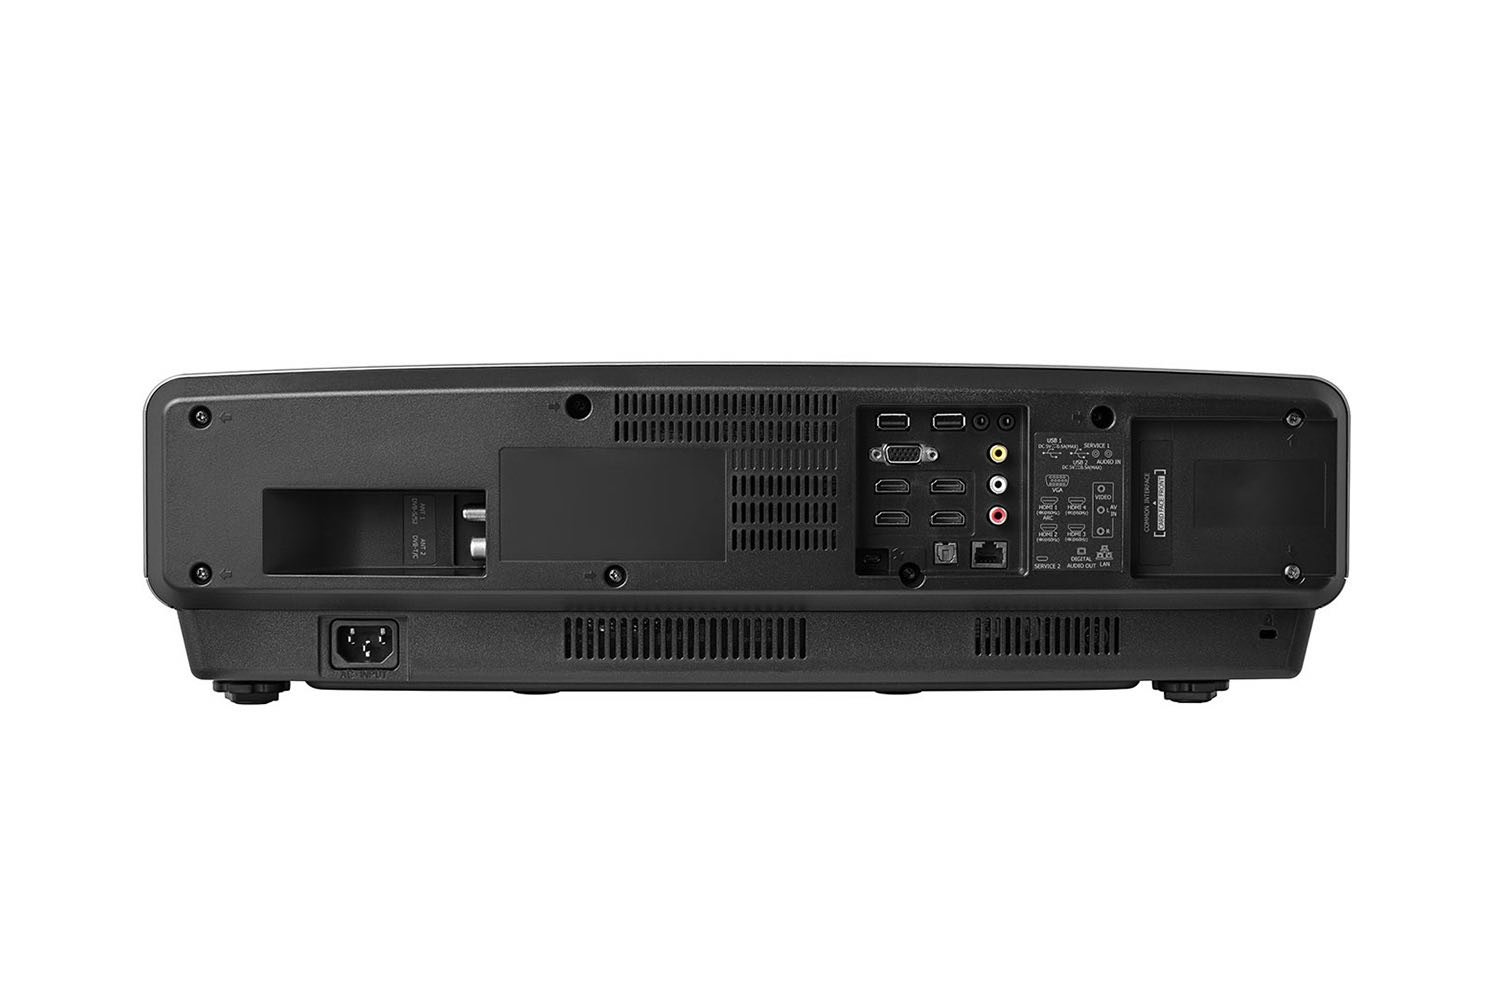 Hisense 120L5F 4K Laser TV - HEIMKINORAUM Edition